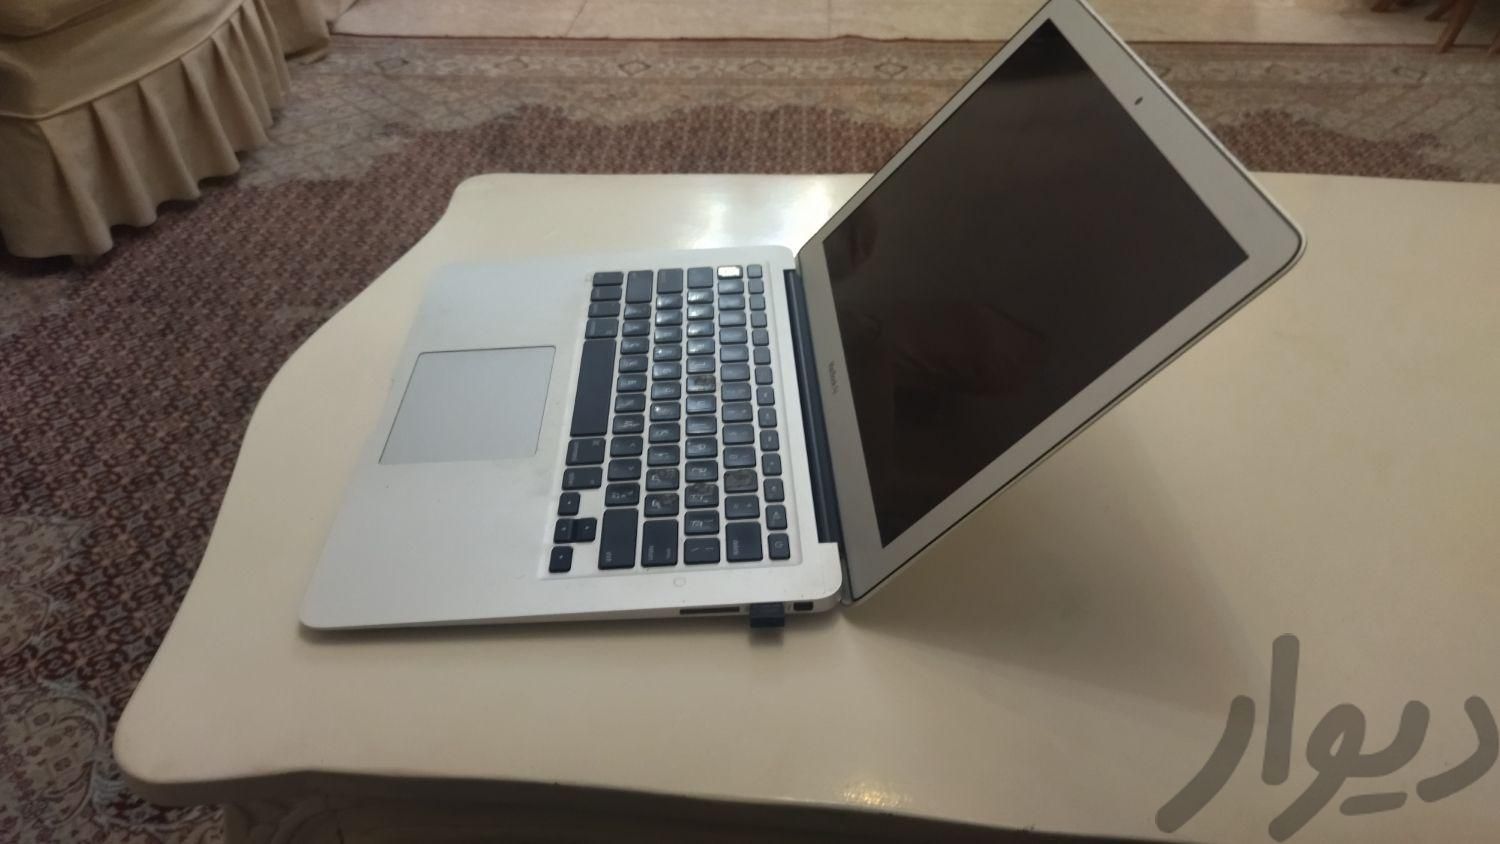 لپ تاپ MacBook air 2017|رایانه همراه|تهران, استاد معین|دیوار